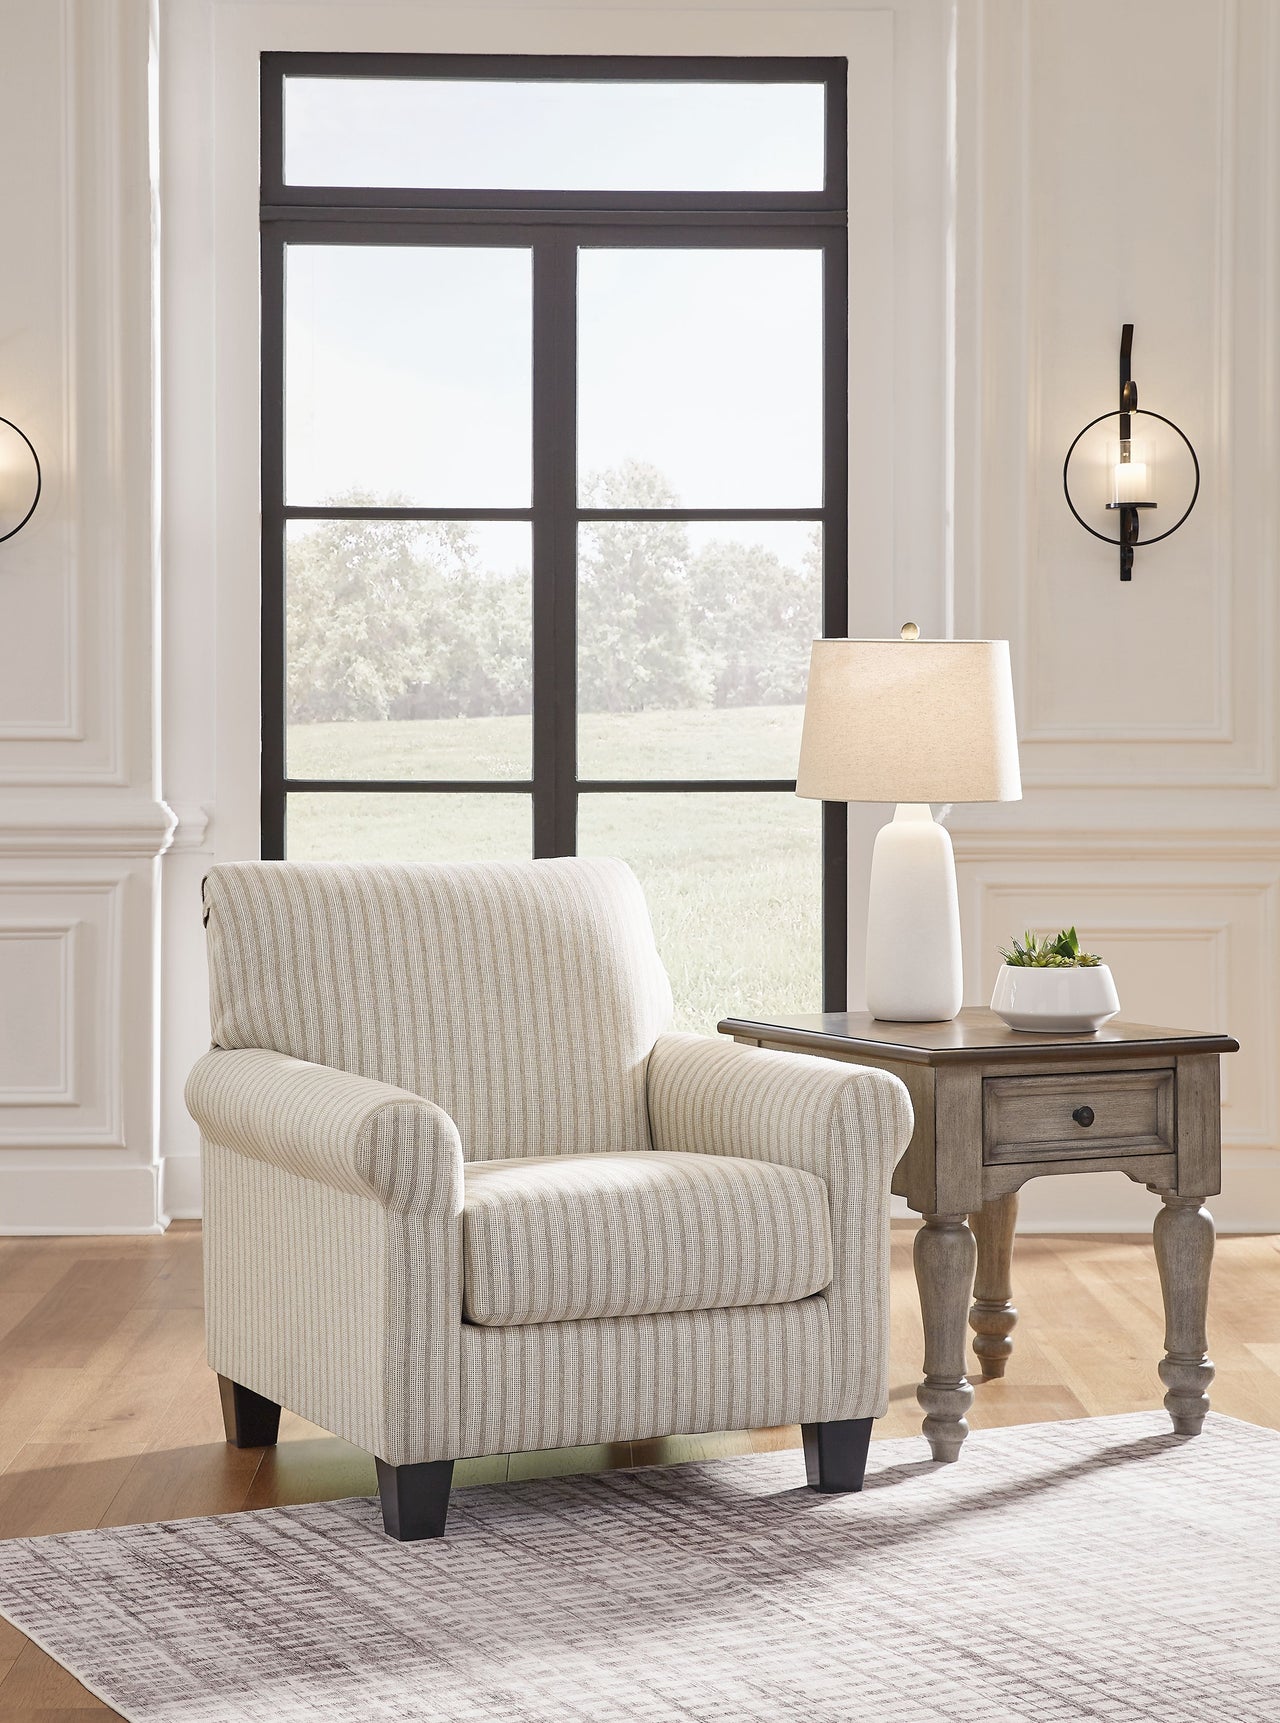 Valerani - Sandstone - Sofa, Loveseat, Accent Chair - Tony's Home Furnishings